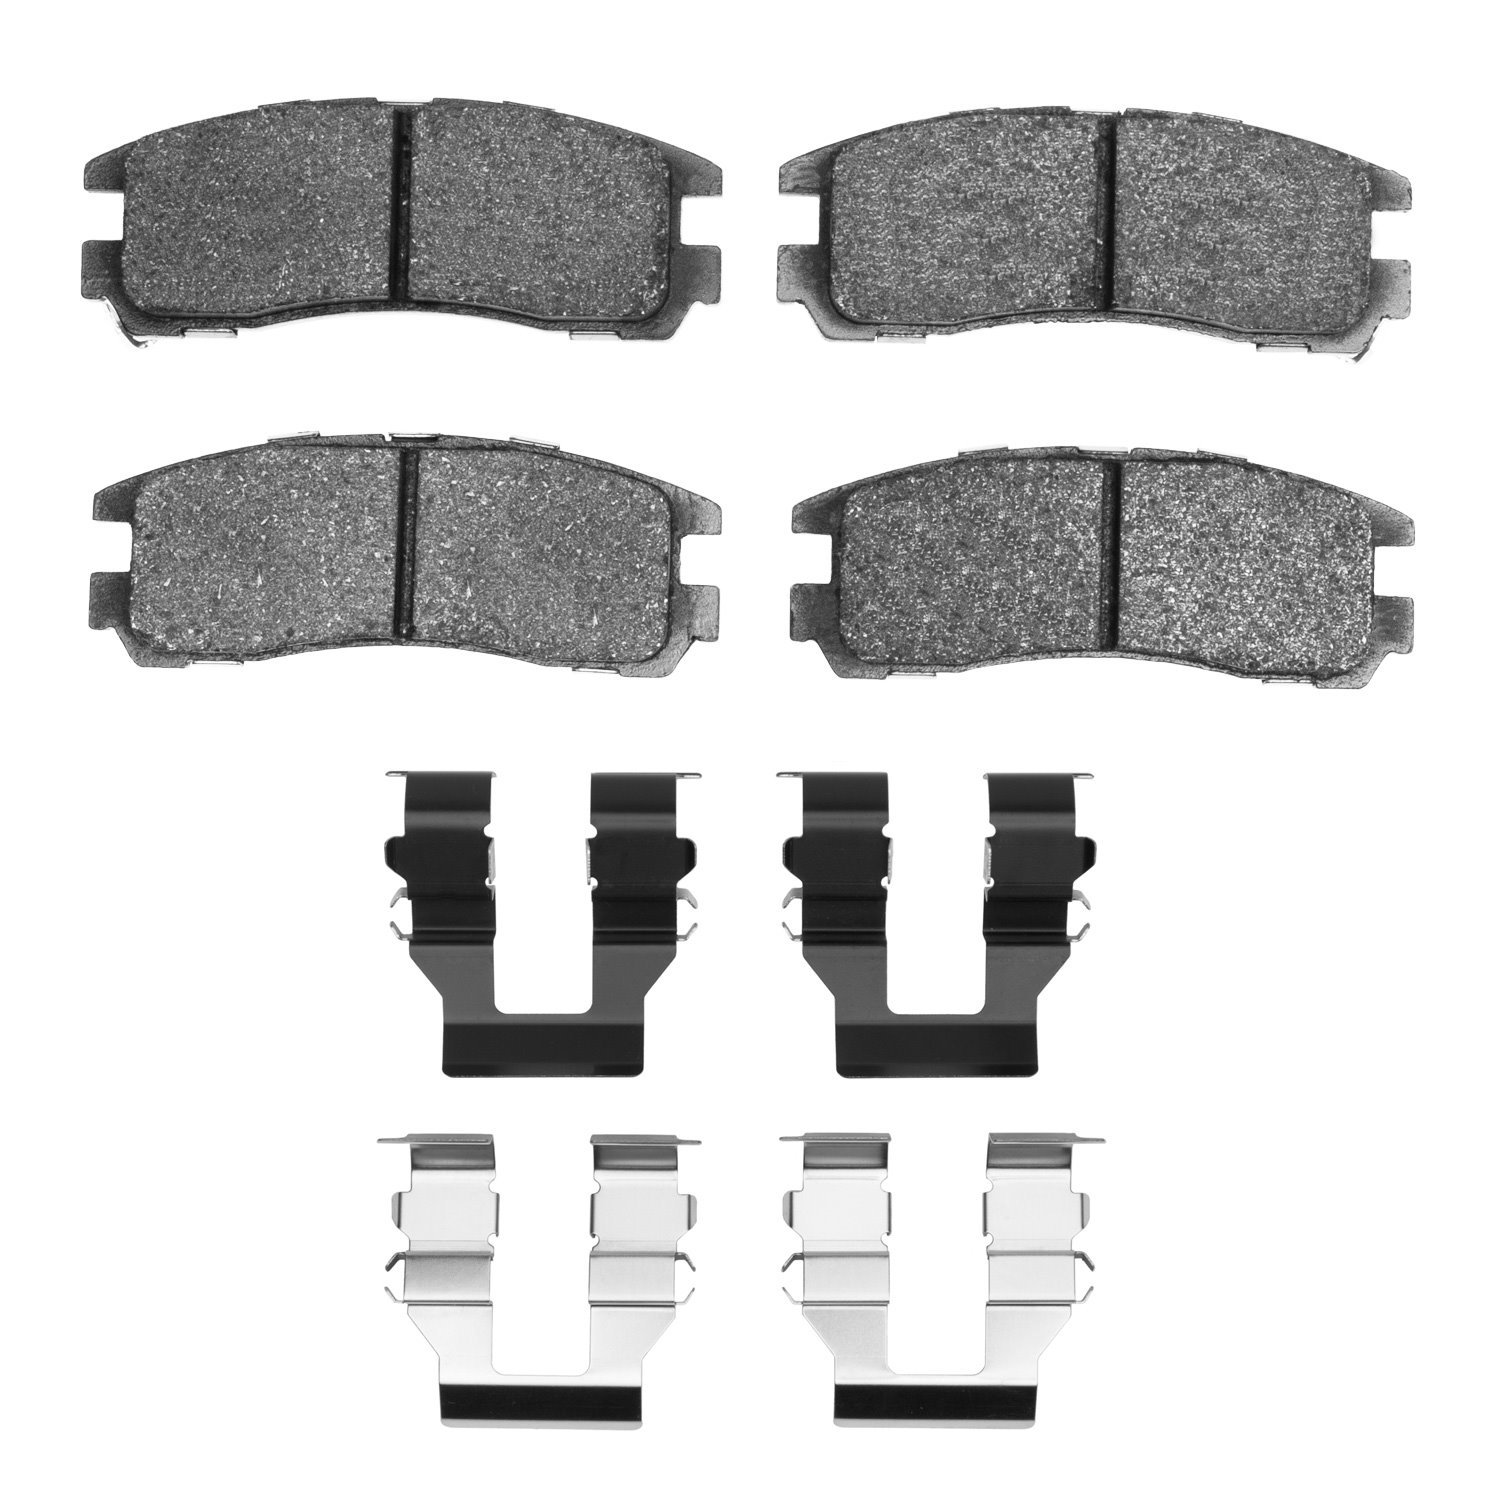 Semi-Metallic Brake Pads & Hardware Kit, 1992-2012 Fits Multiple Makes/Models, Position: Rear